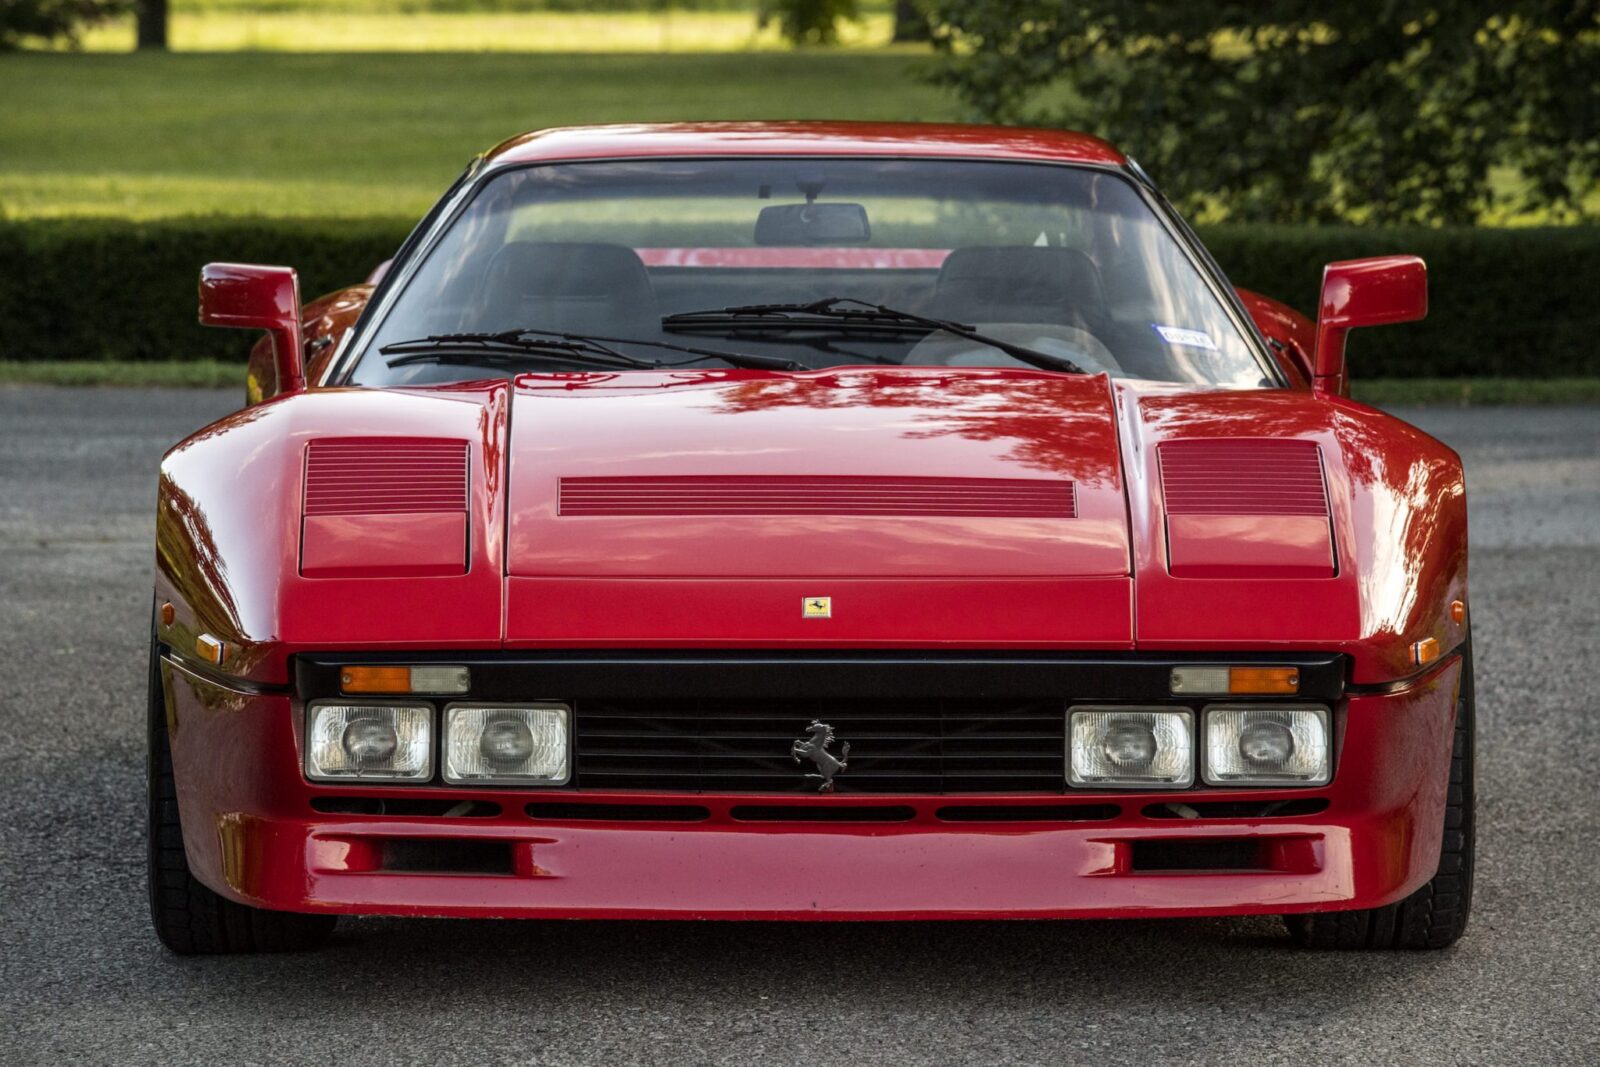 Ferrari-288-GTO-2-1600x1067.jpg